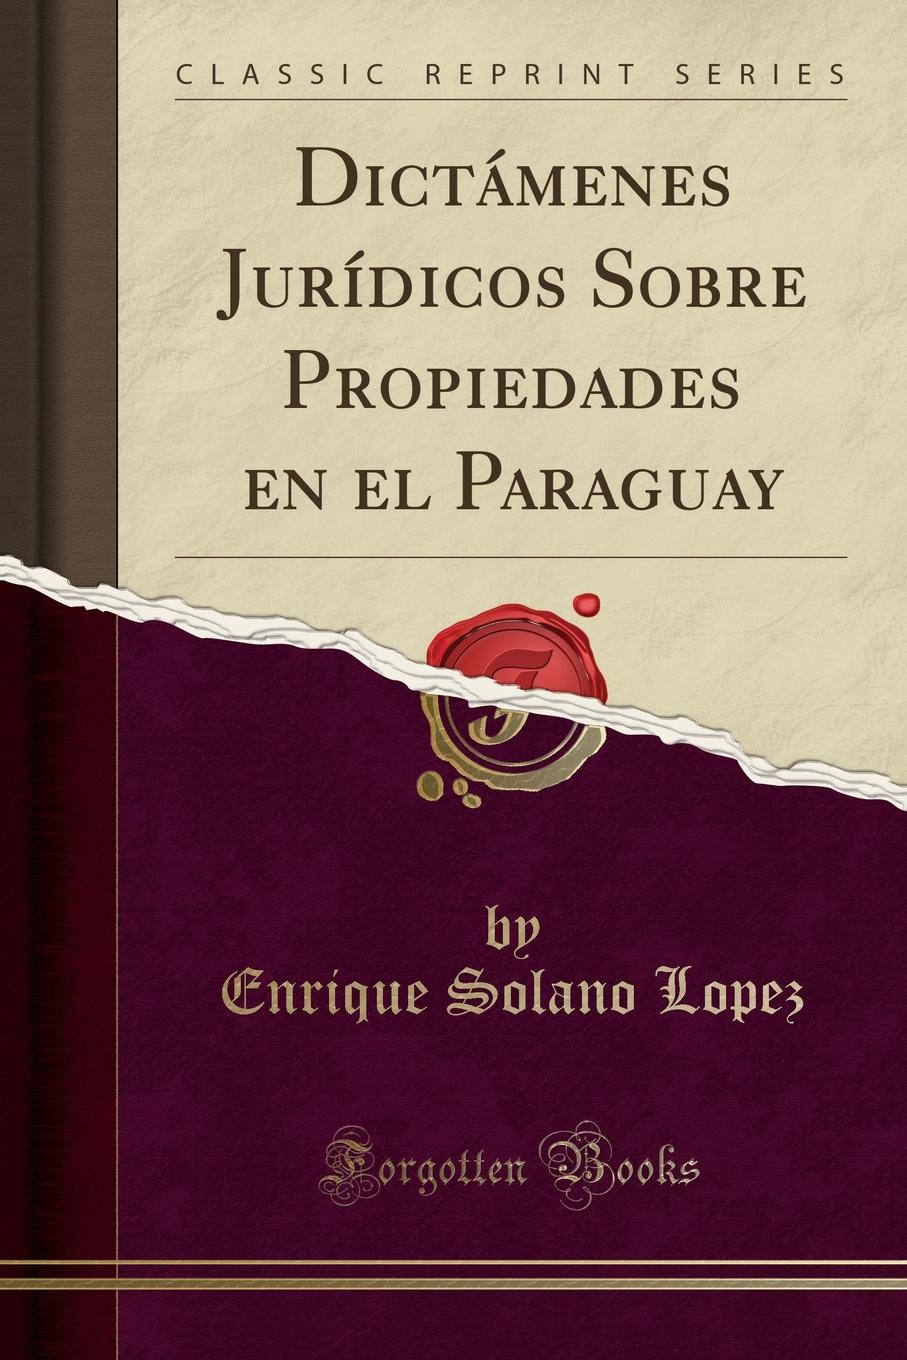 Dictamenes Juridicos Sobre Propiedades en el Paraguay (Classic Reprint)